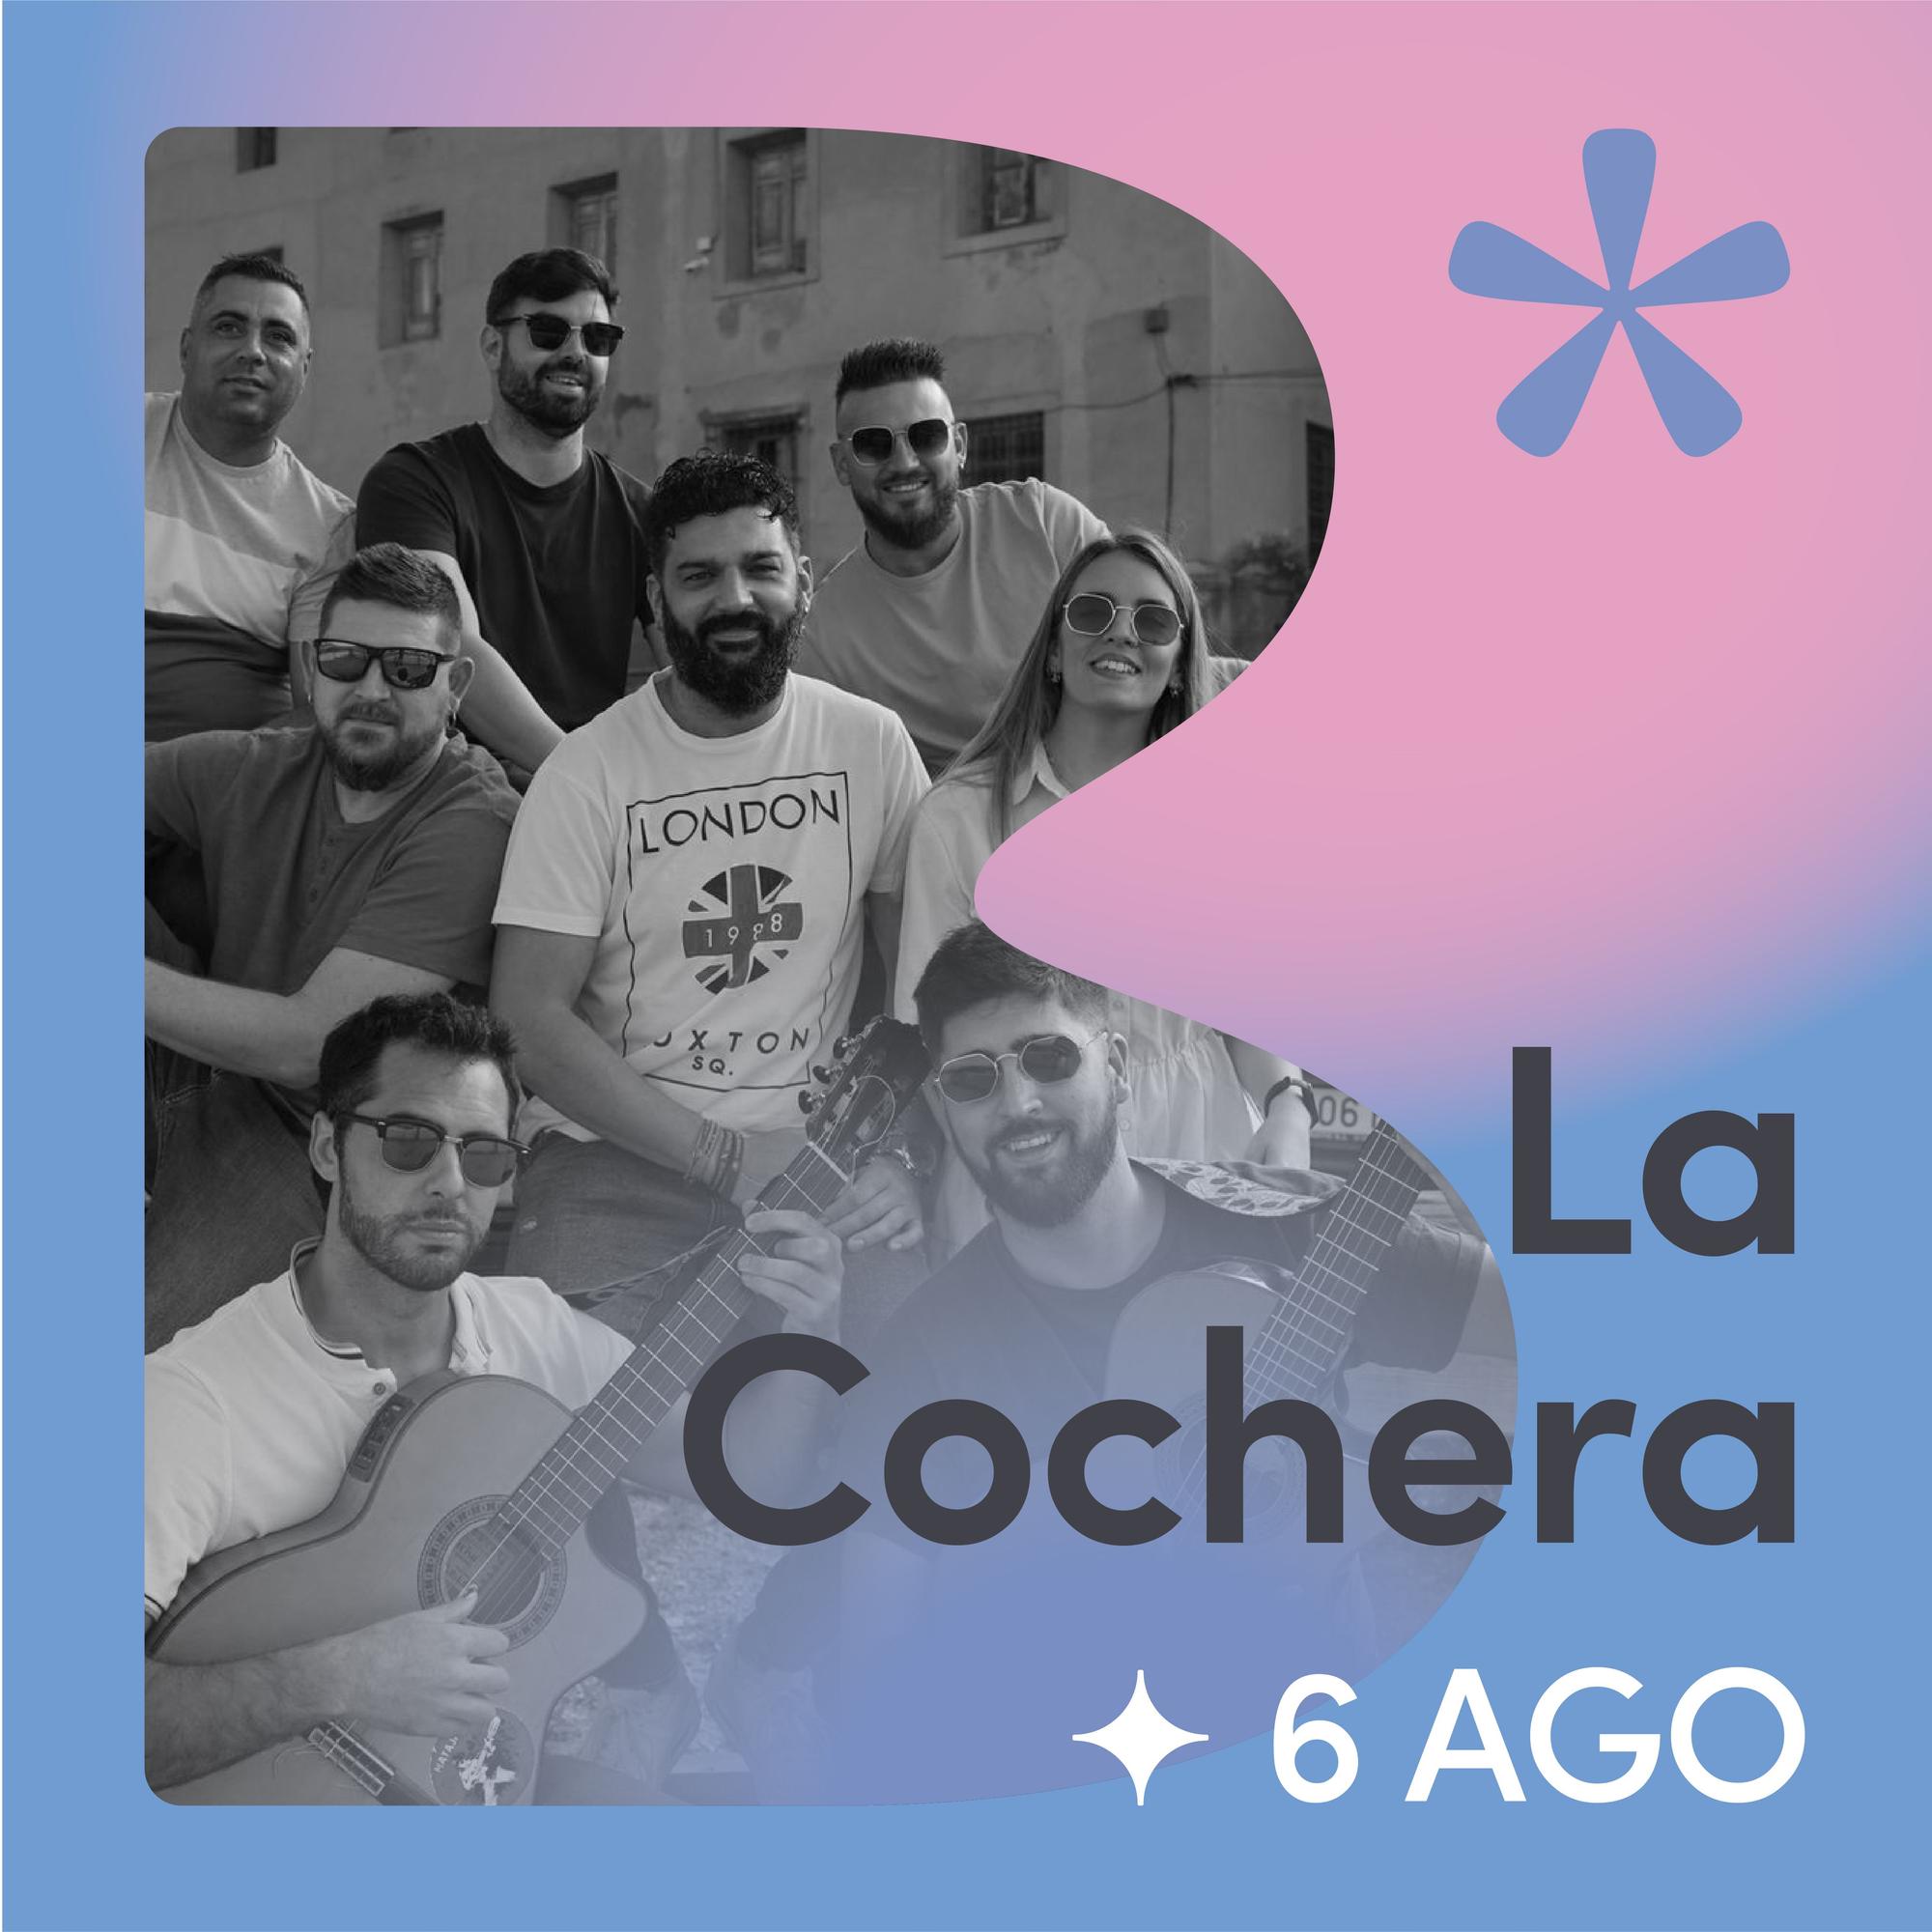 El grupo flamenco La Cochera